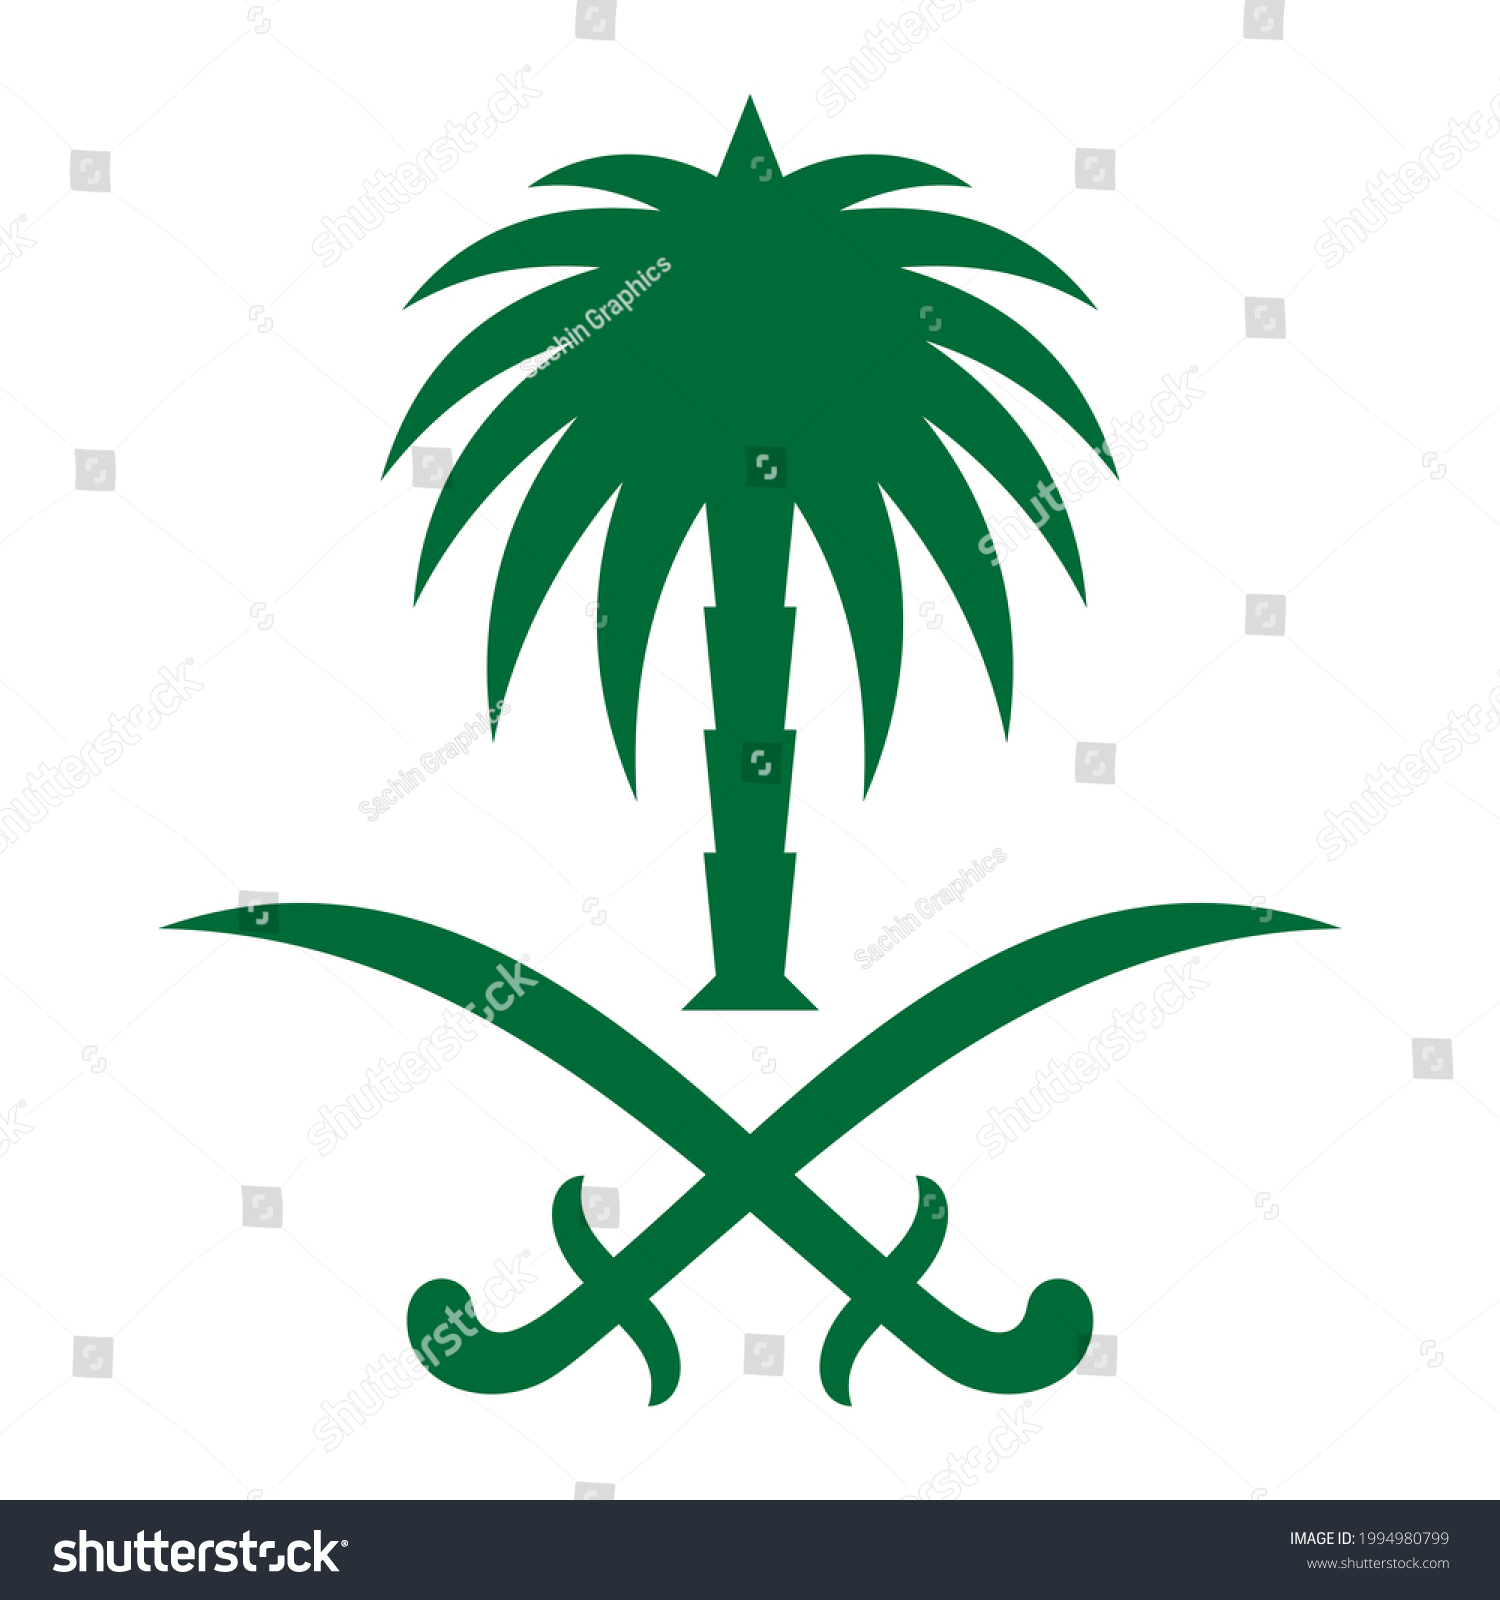 22,356 Saudi logo Images, Stock Photos & Vectors | Shutterstock